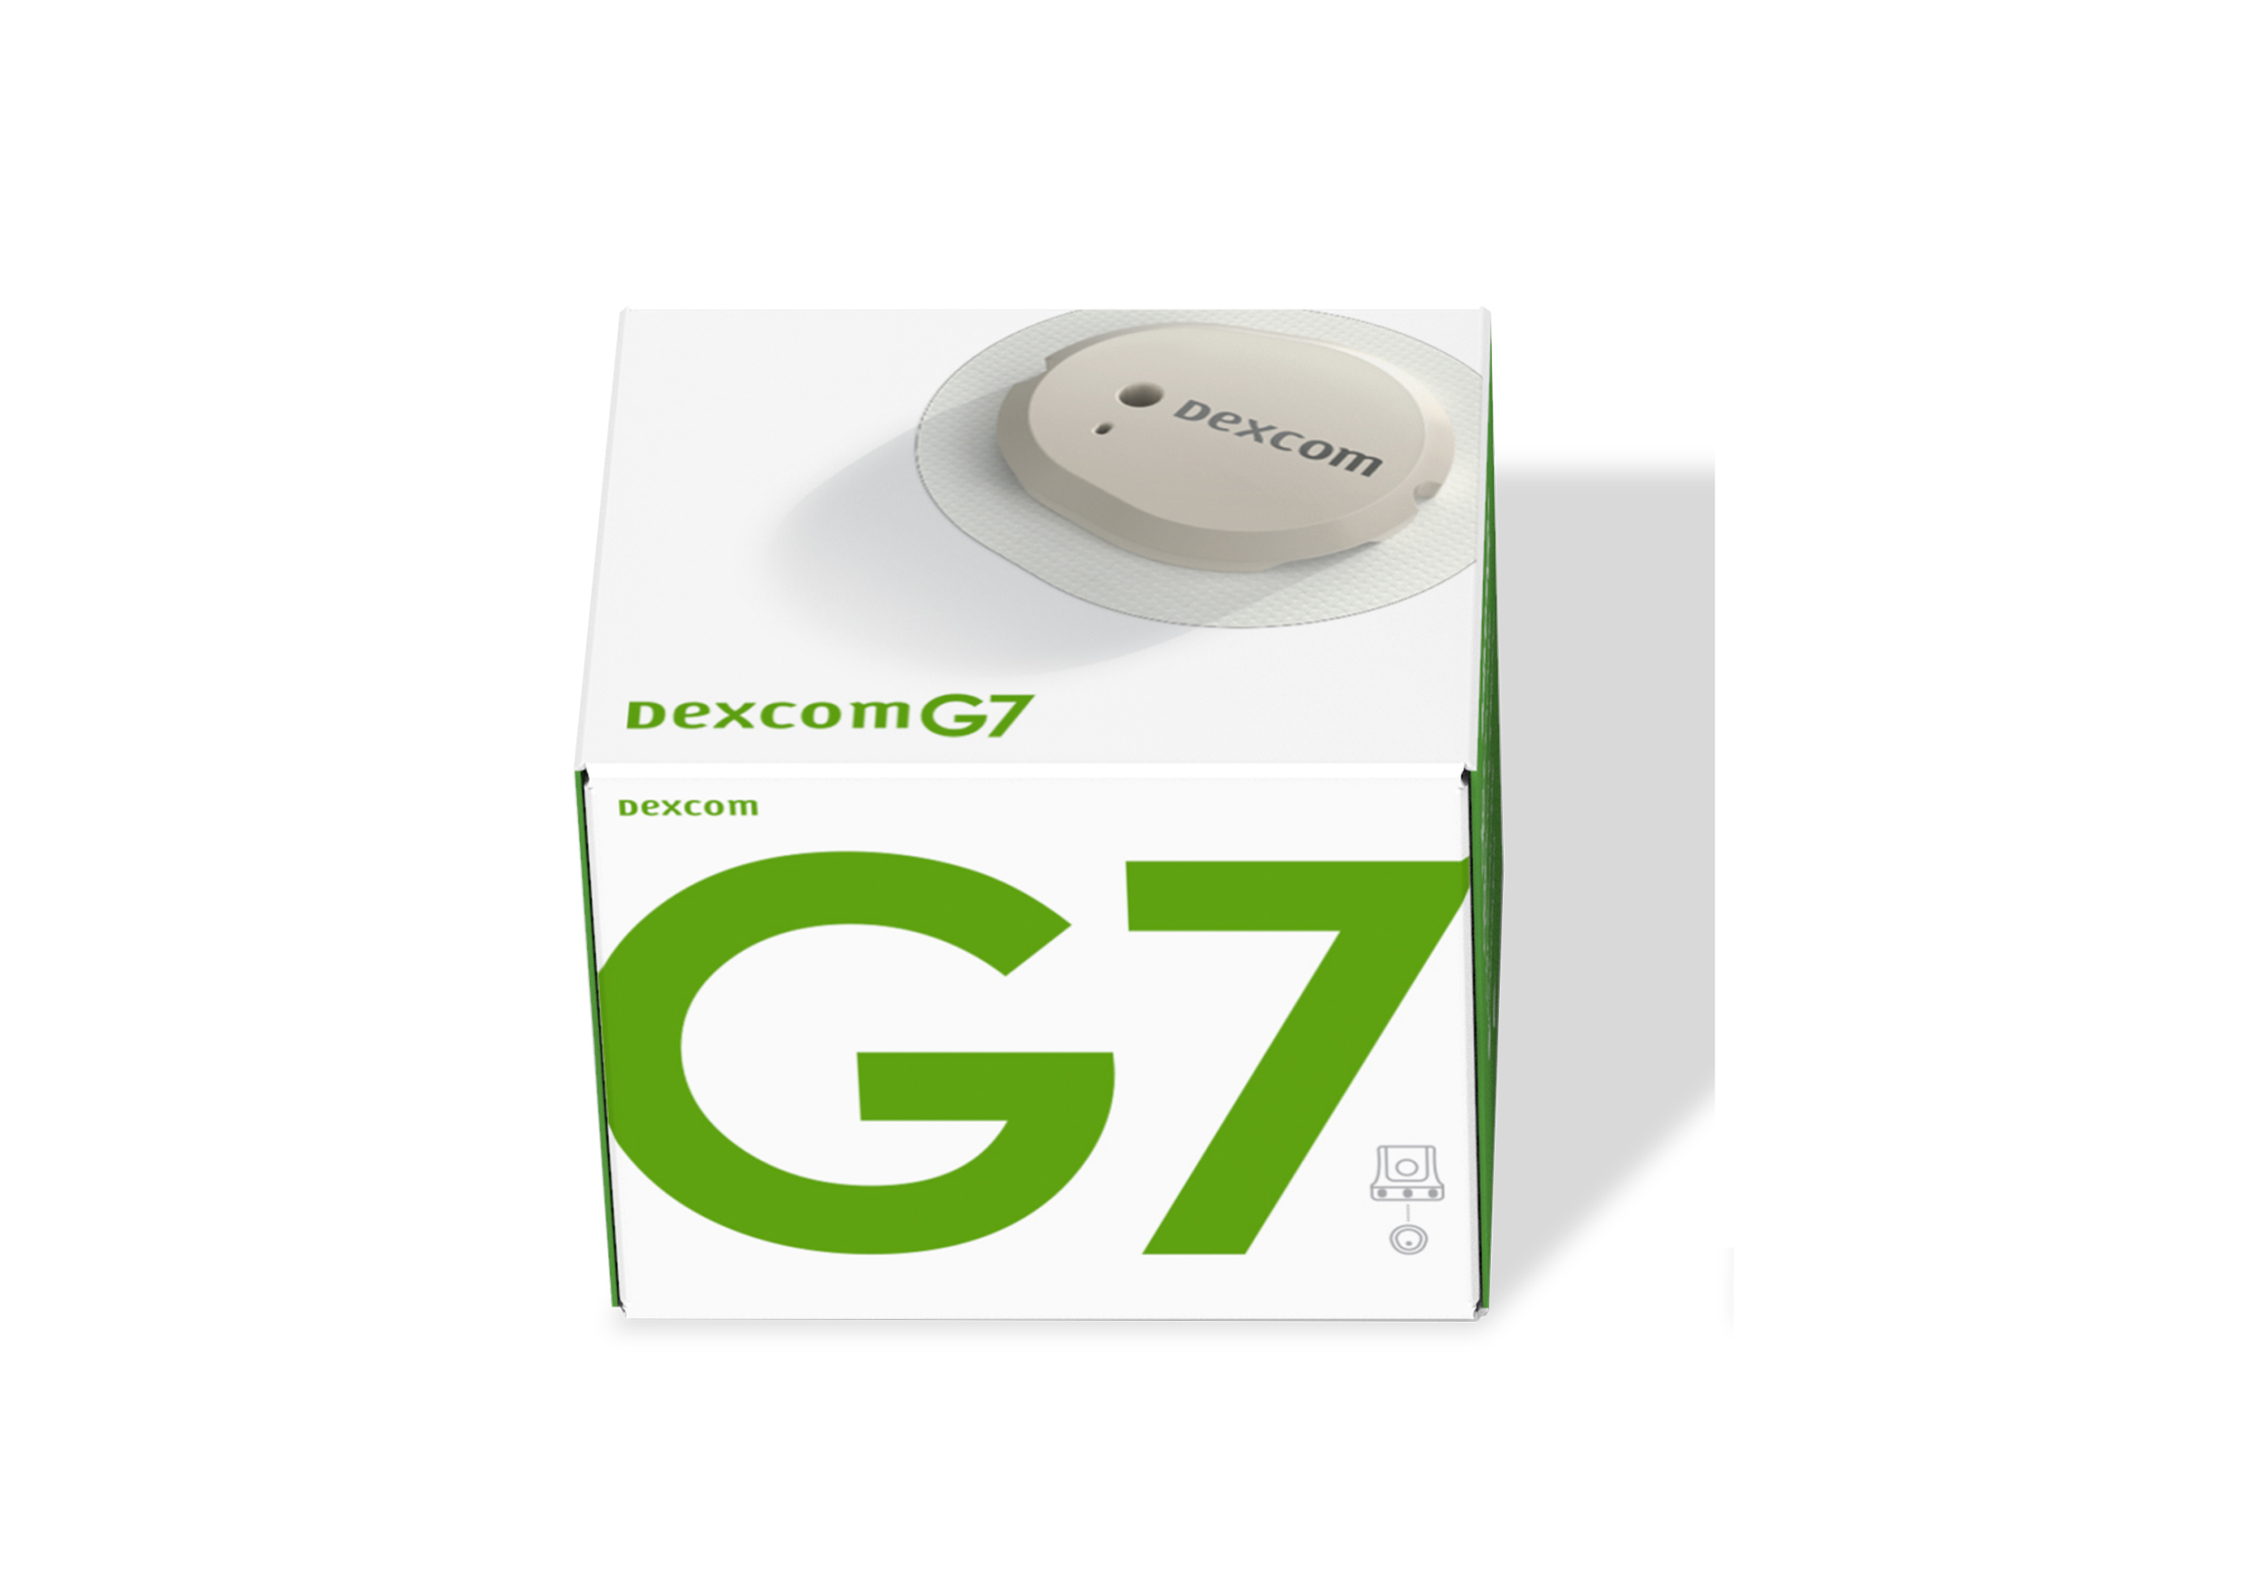 Dexcom G7 Packaging